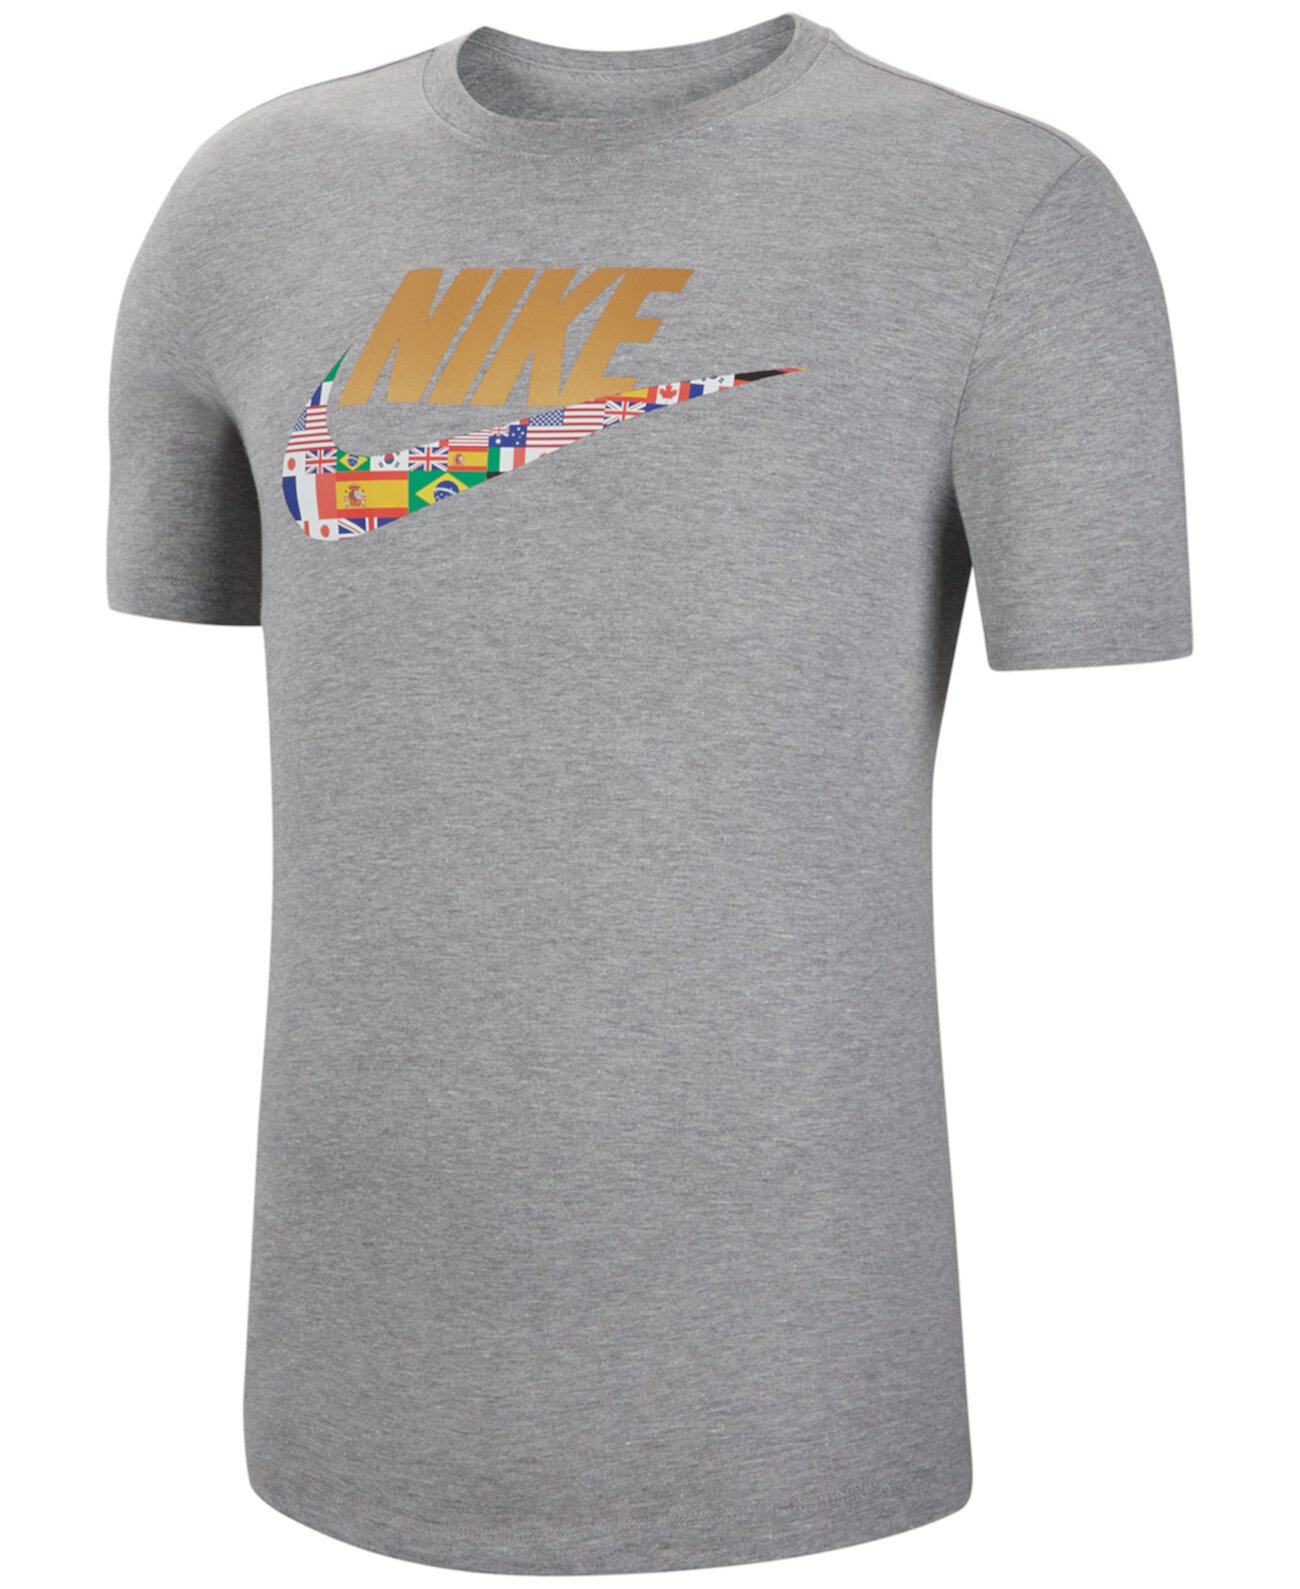 Мужская футболка с логотипом и галочкой с олимпийским флагом Nike